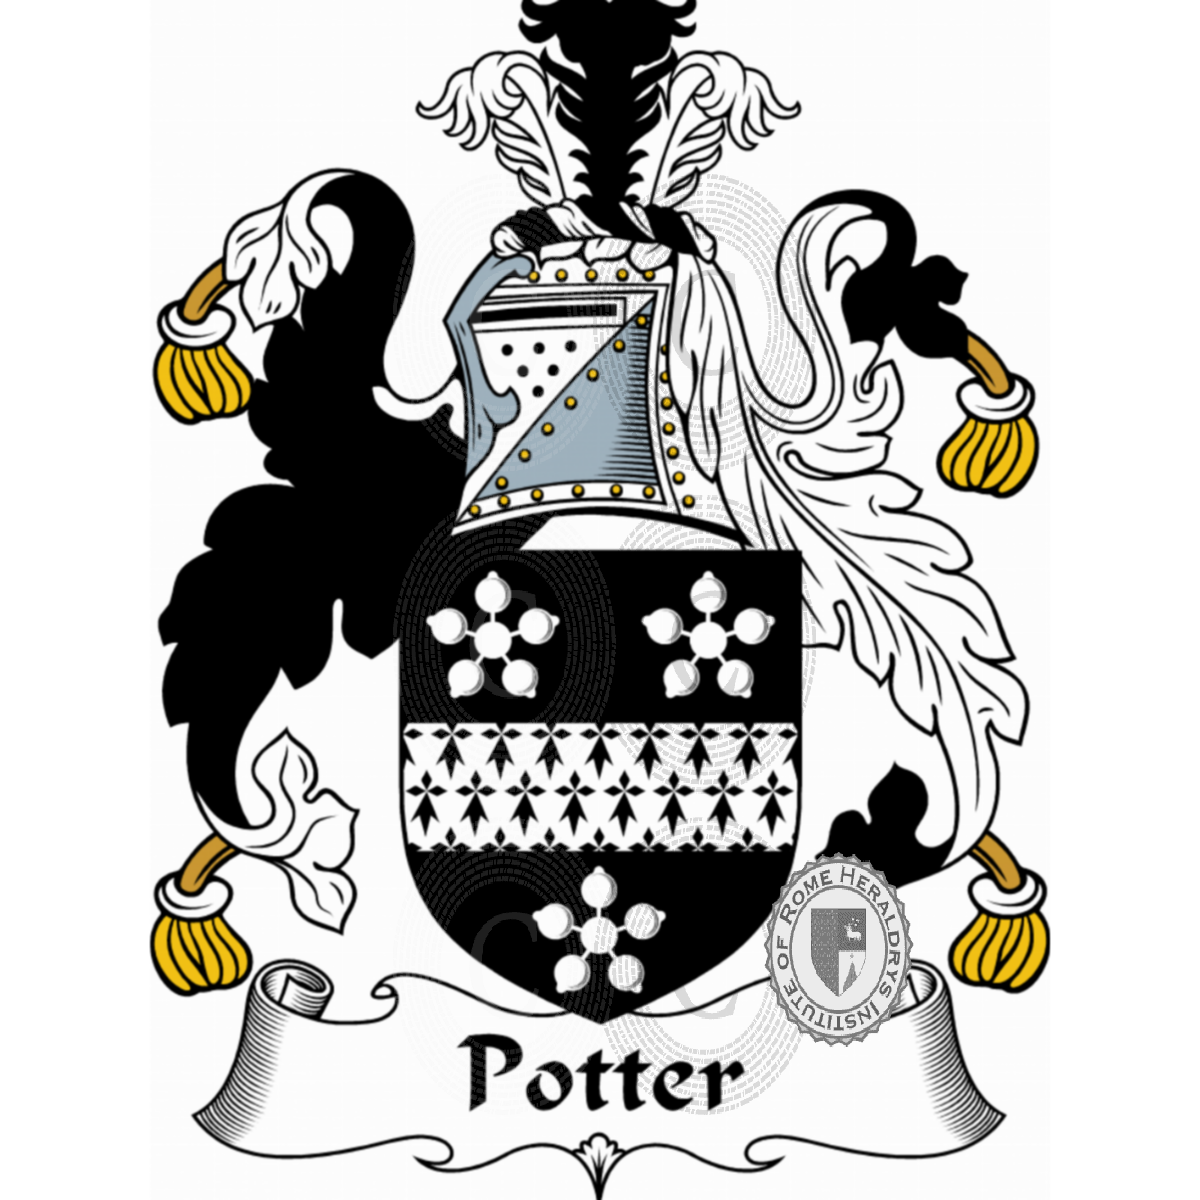 Wappen der FamiliePotter